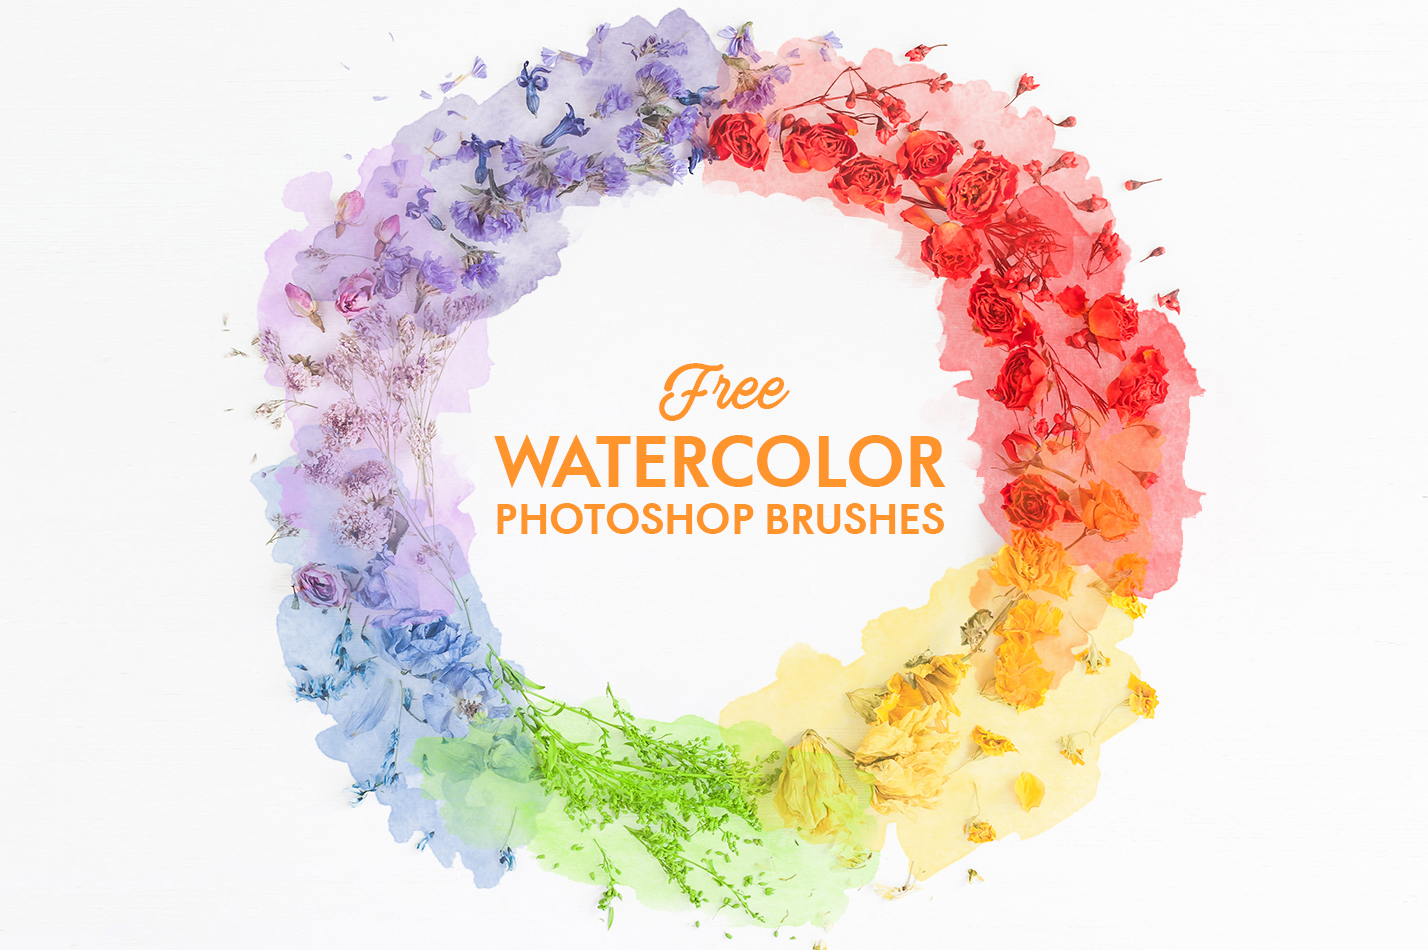 Photoshop Watercolor Brushes|Watercolor Photoshop Brush – Free Bundle